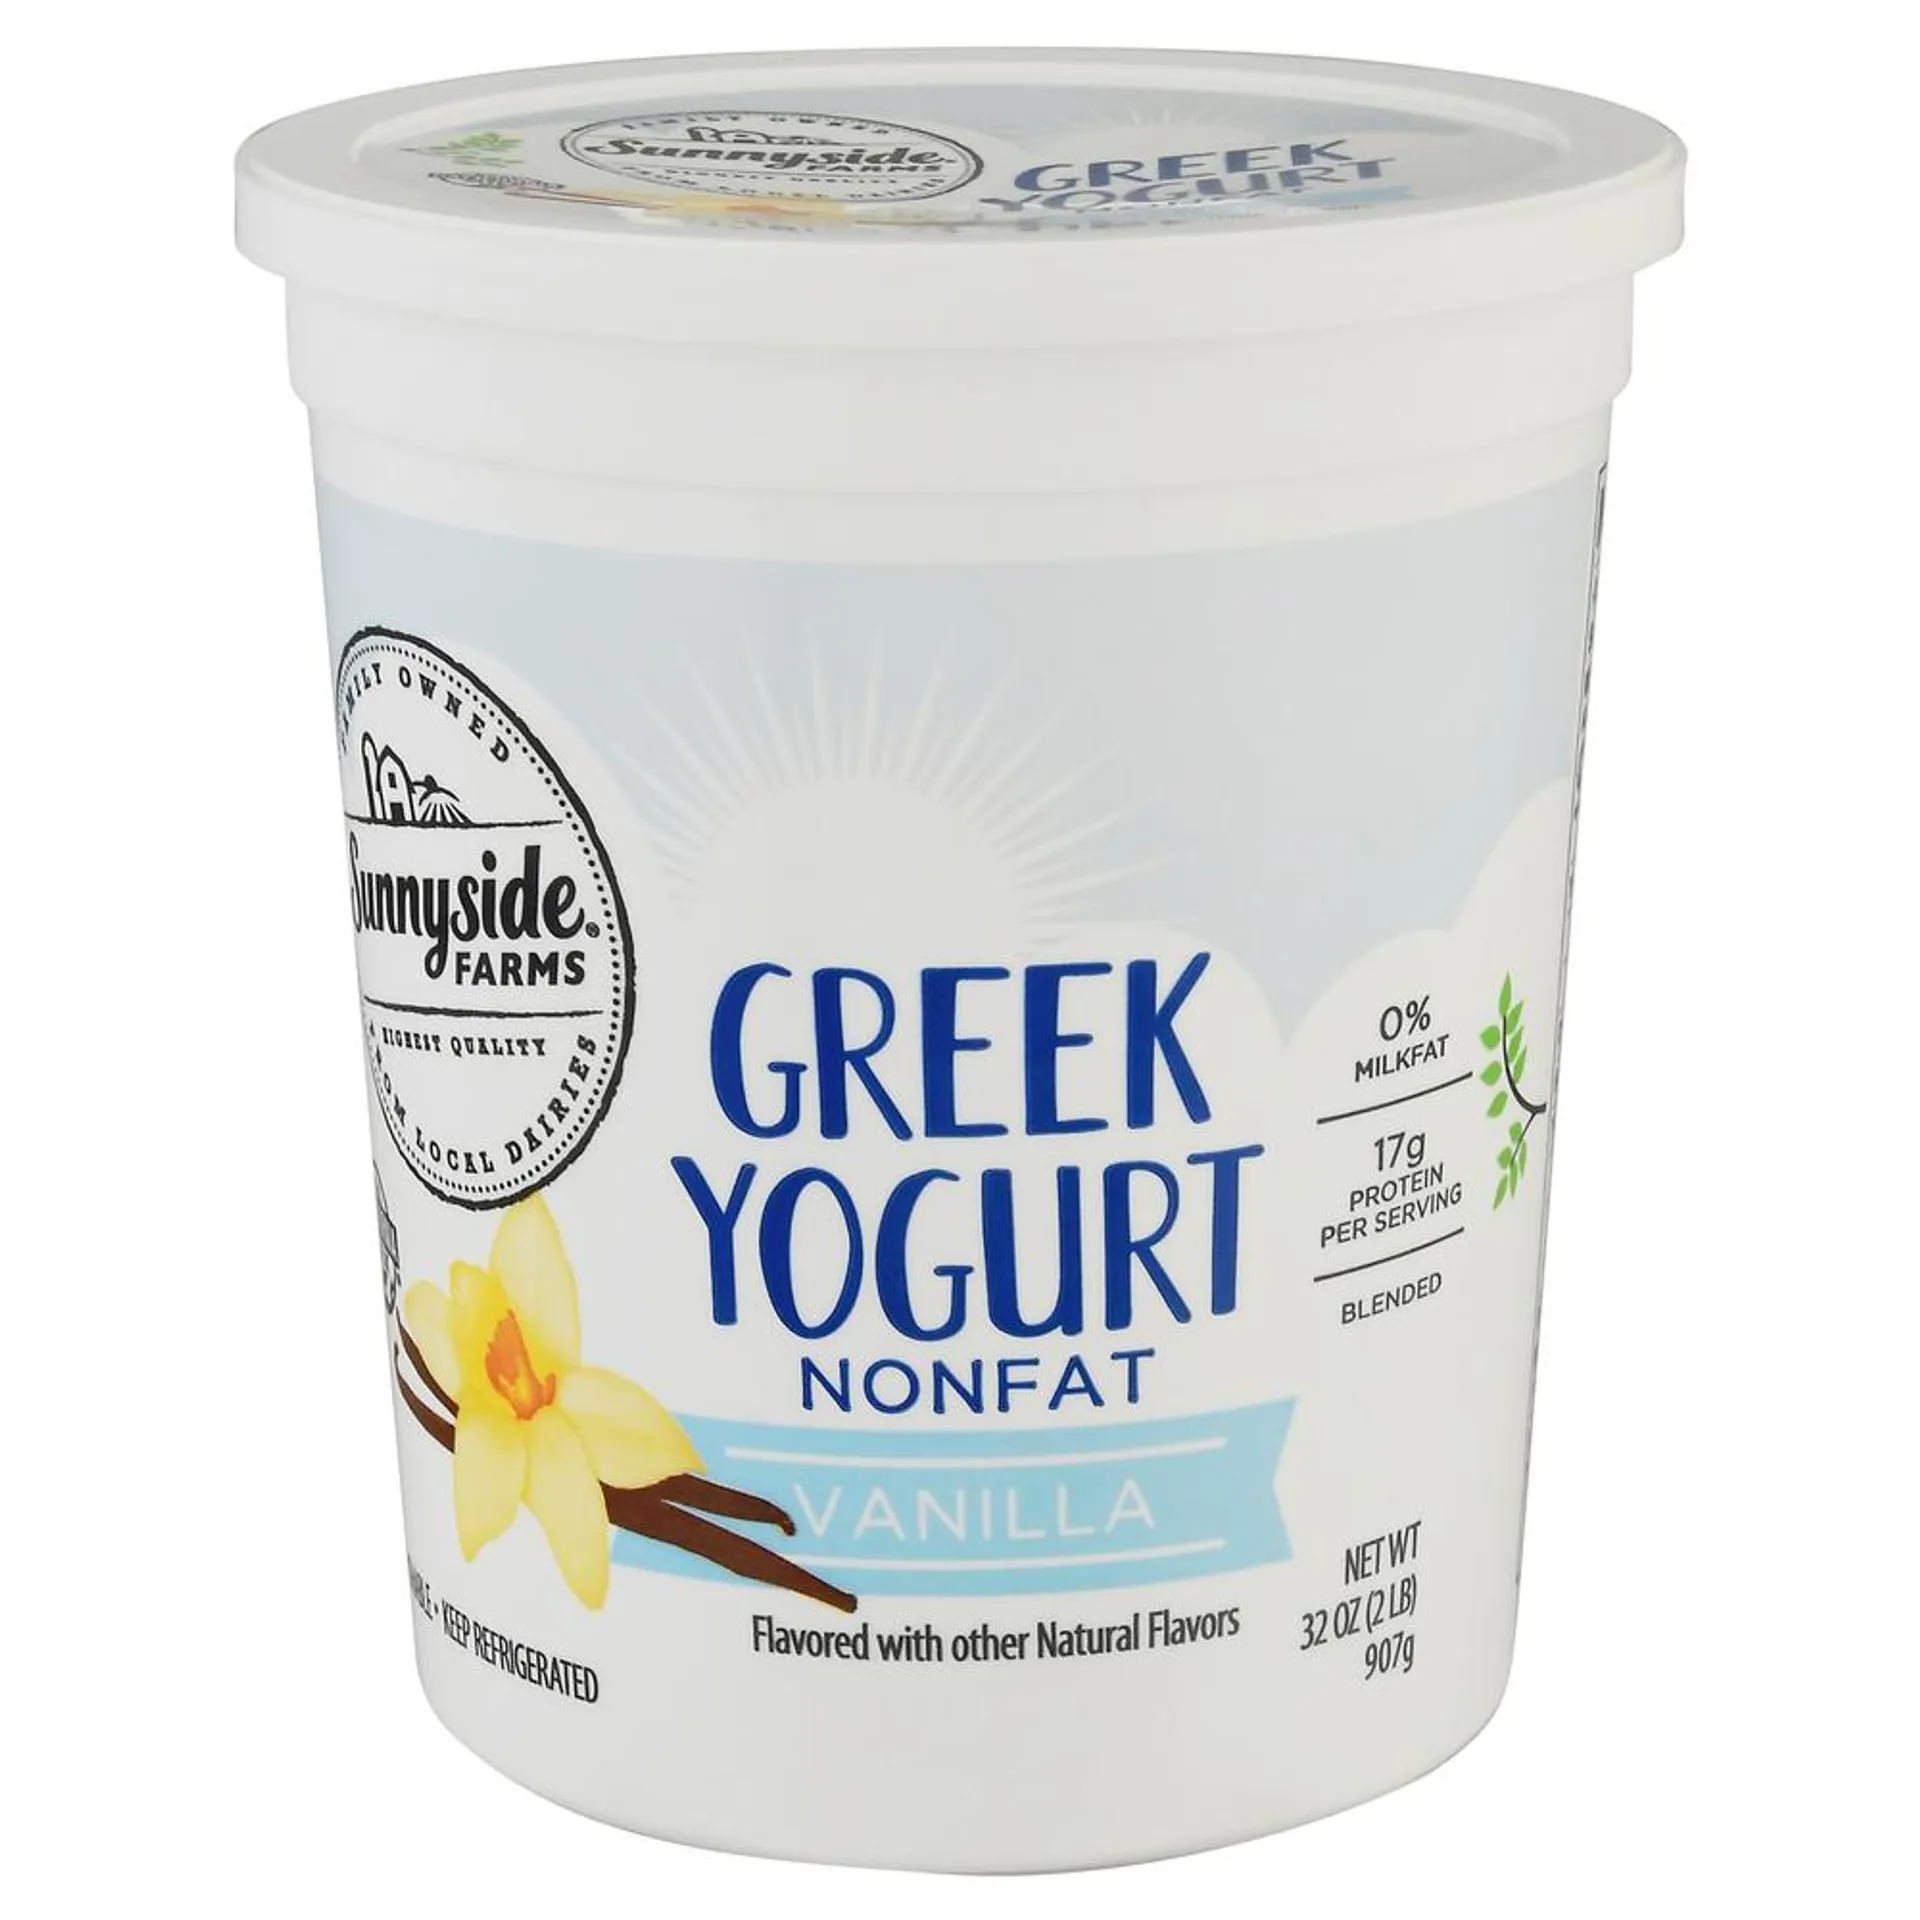 Sunnyside Farms Yogurt, Greek, Nonfat, Vanilla